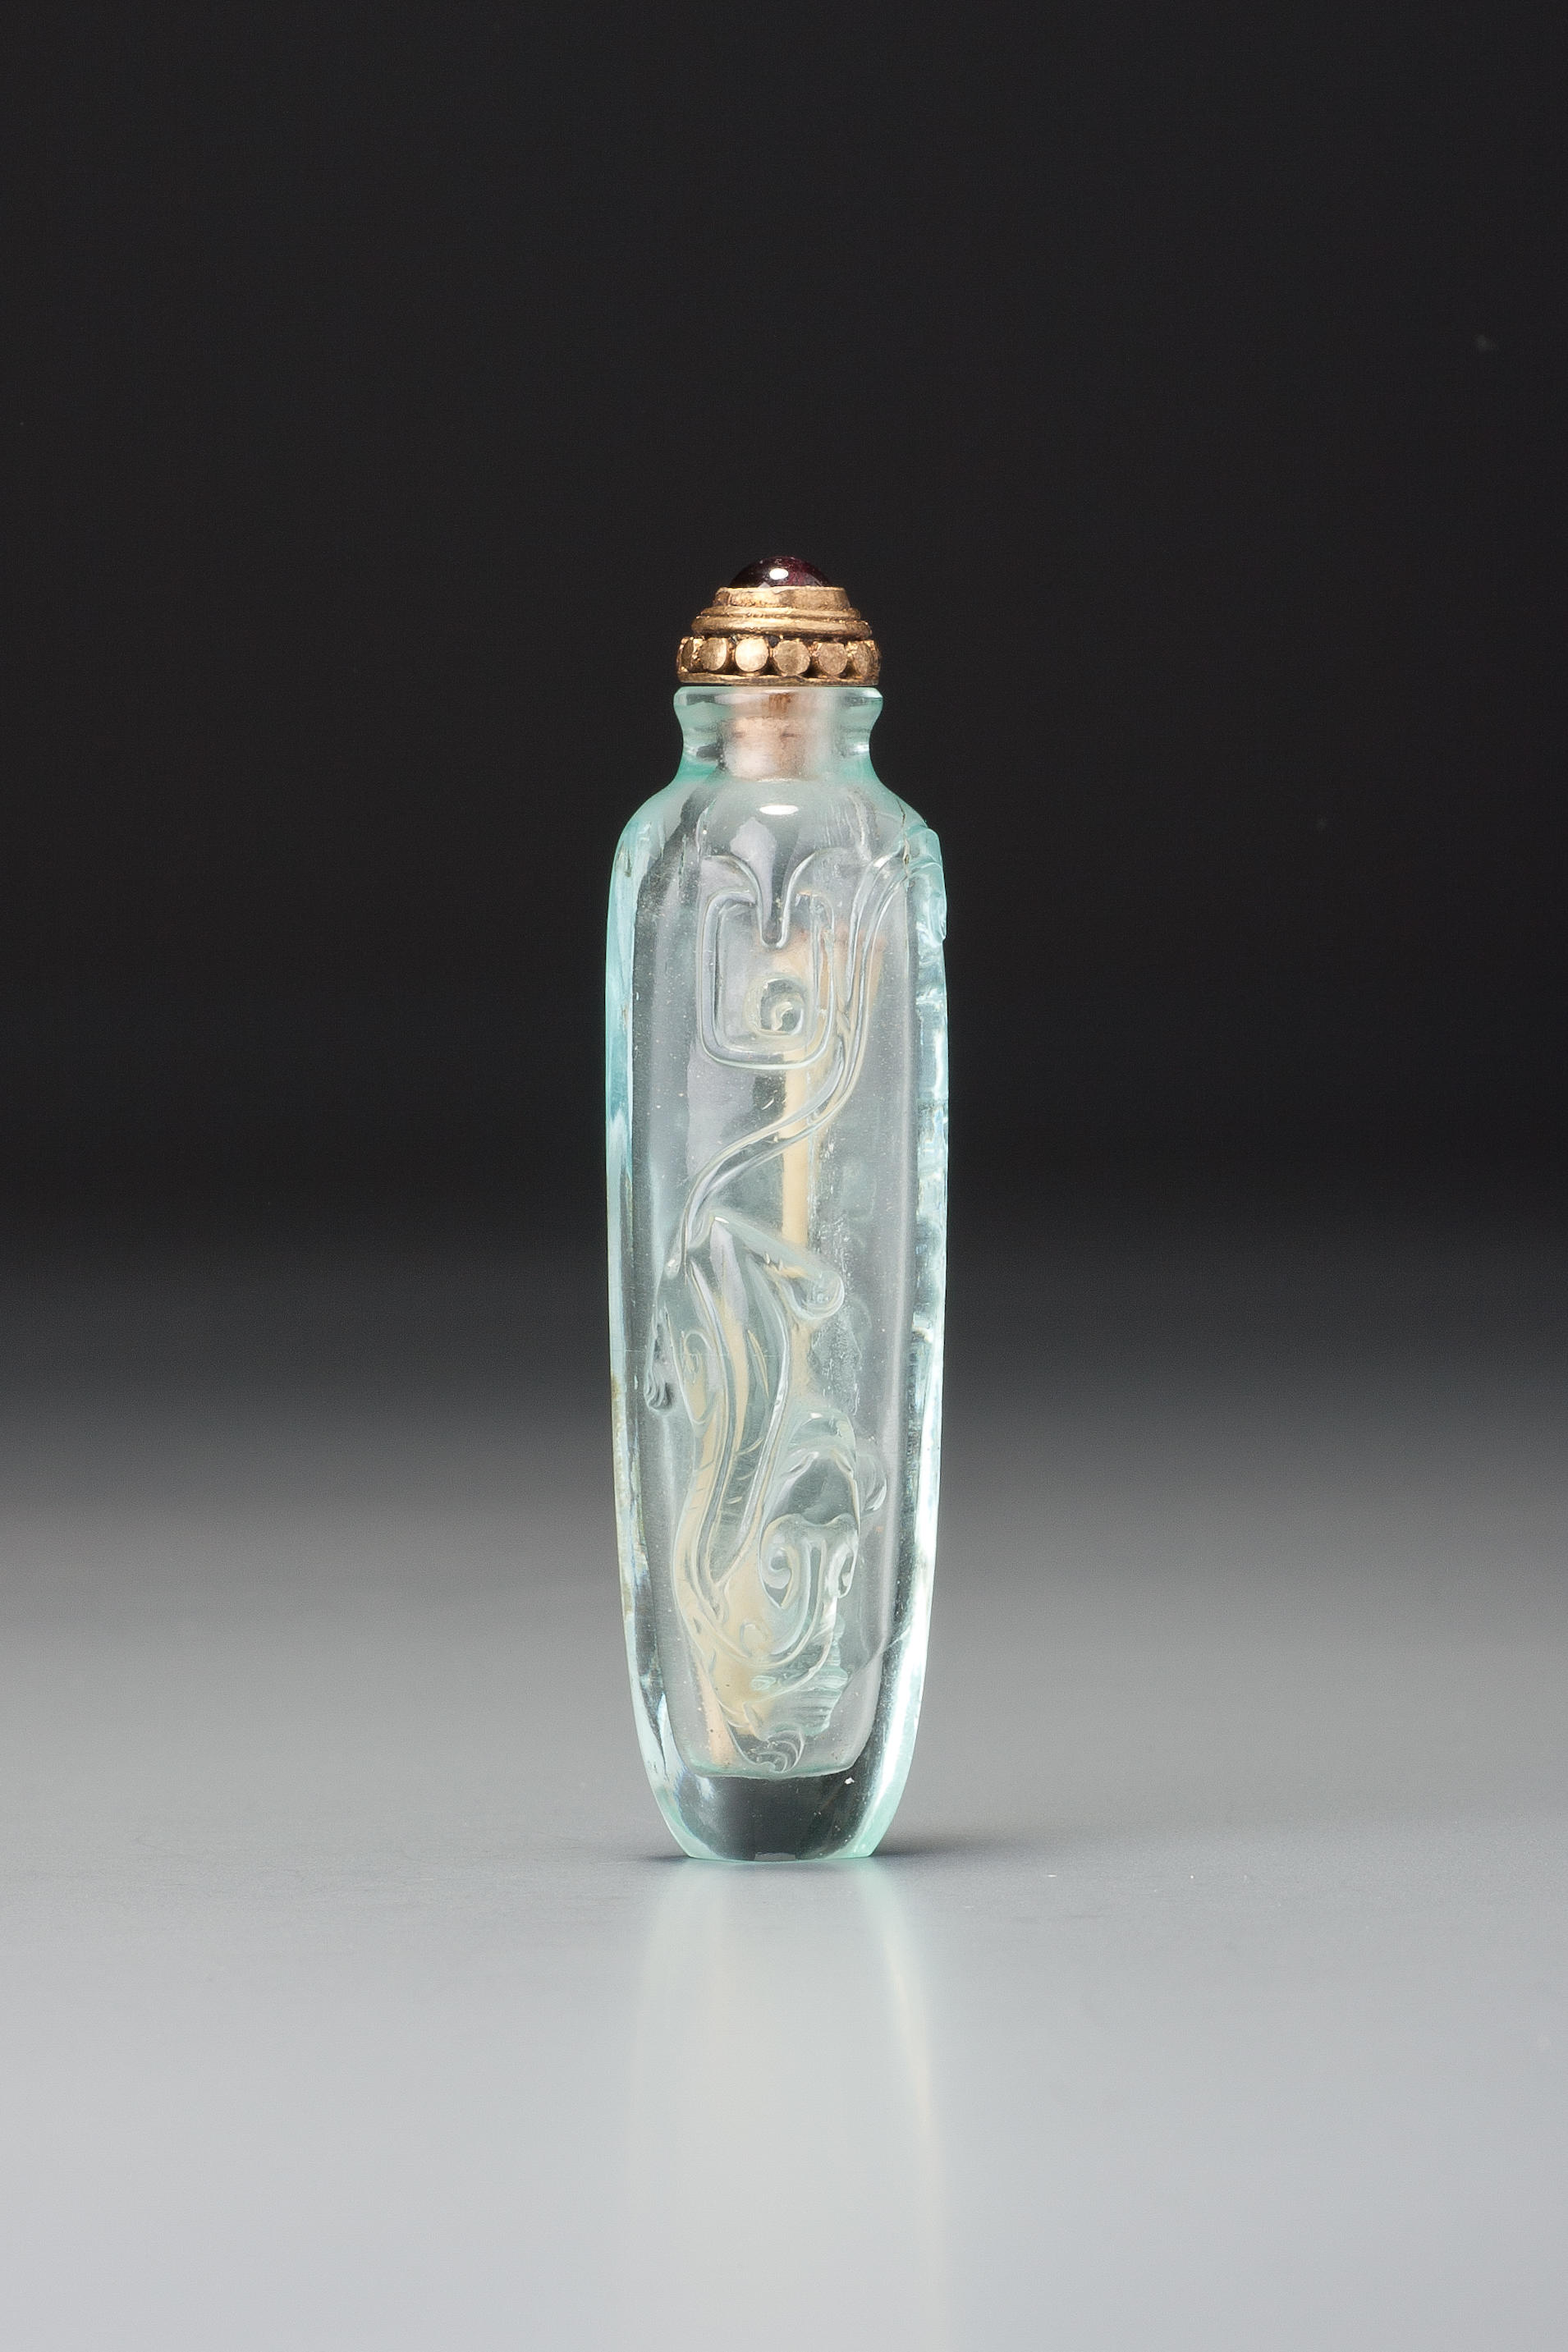 An inscribed aquamarine snuff bottle